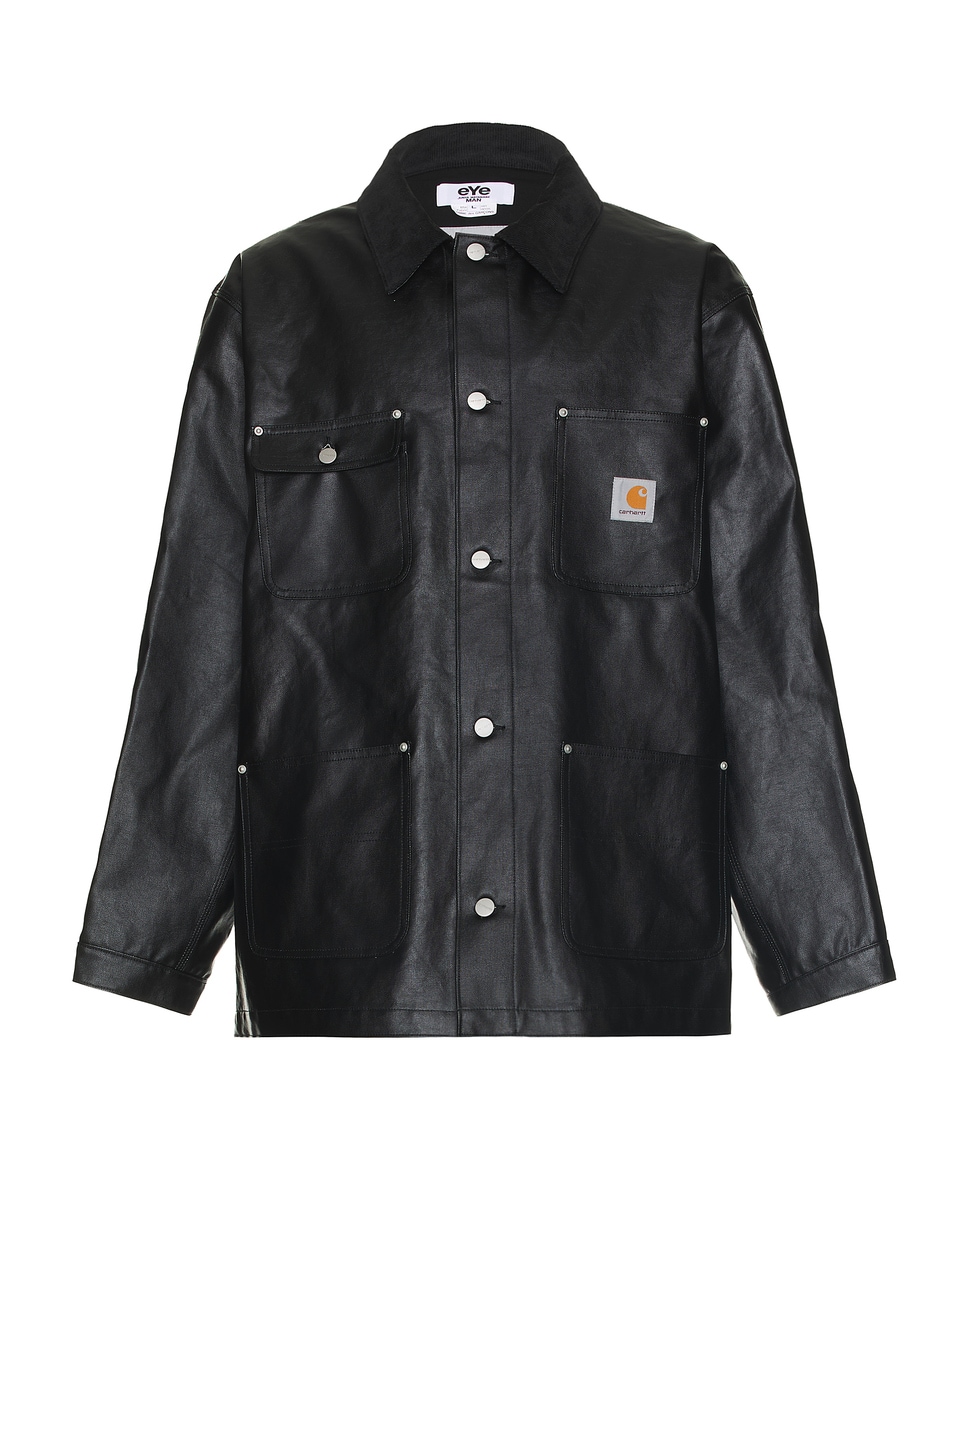 Image 1 of Junya Watanabe x Carhartt Jacket in Black